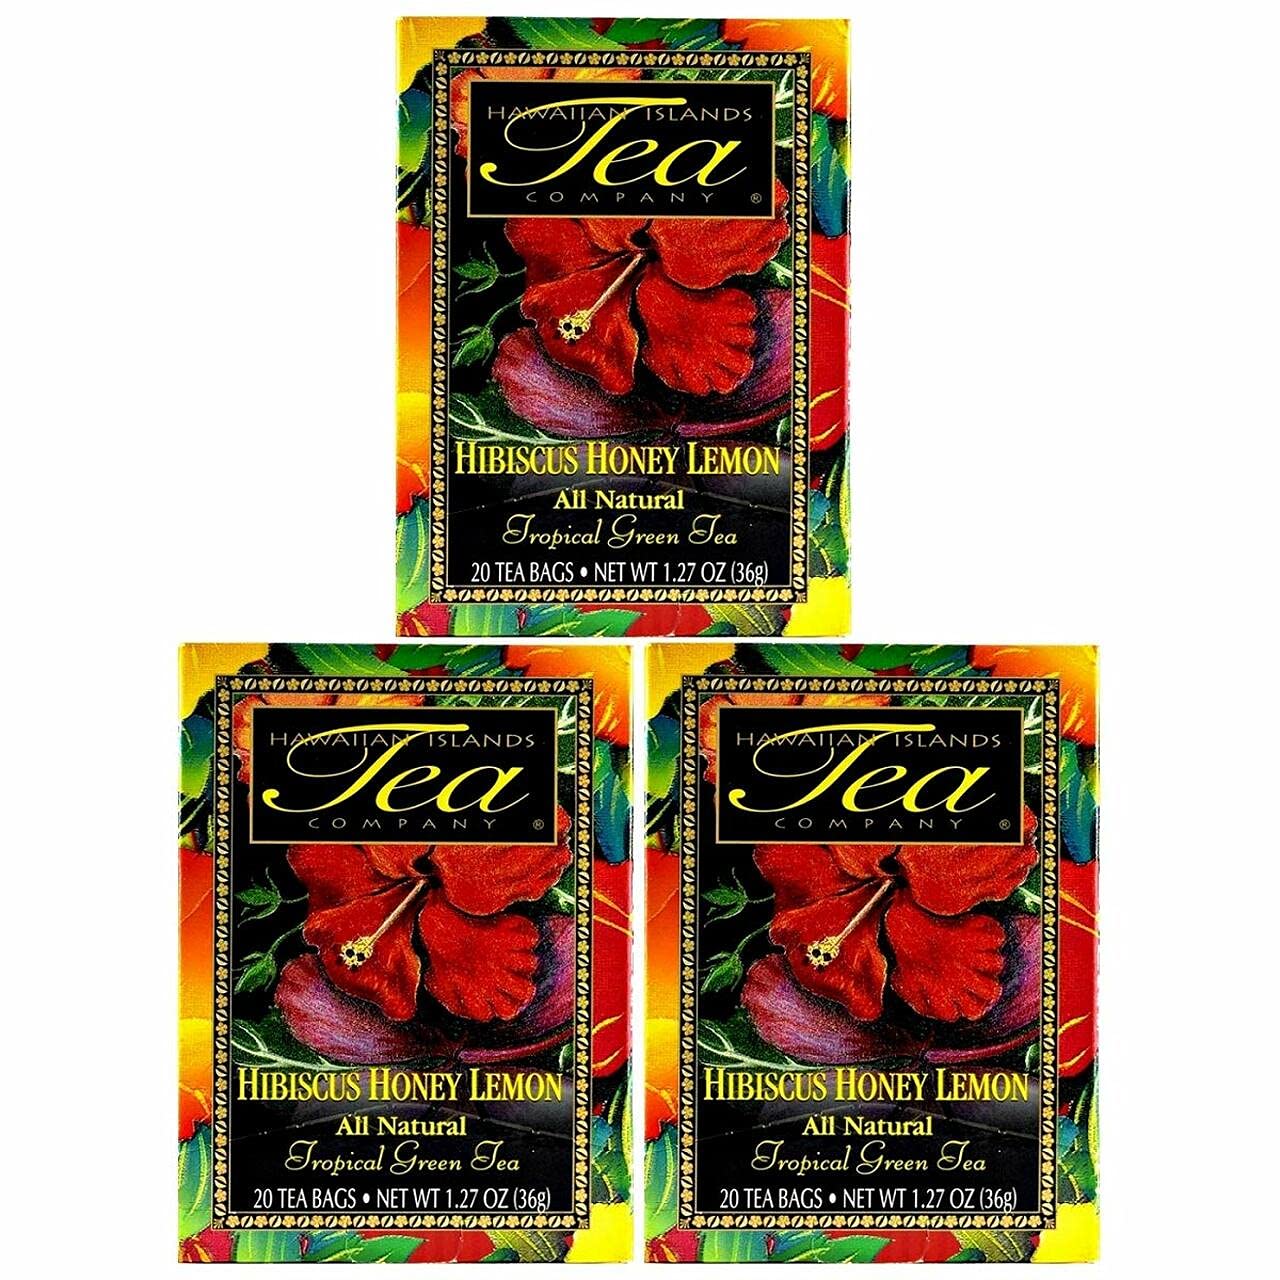 Hawaiian Islands Hibiscus Honey Lemon Tropical Green Tea, All Natural - 20 Teabags (6 Boxes)